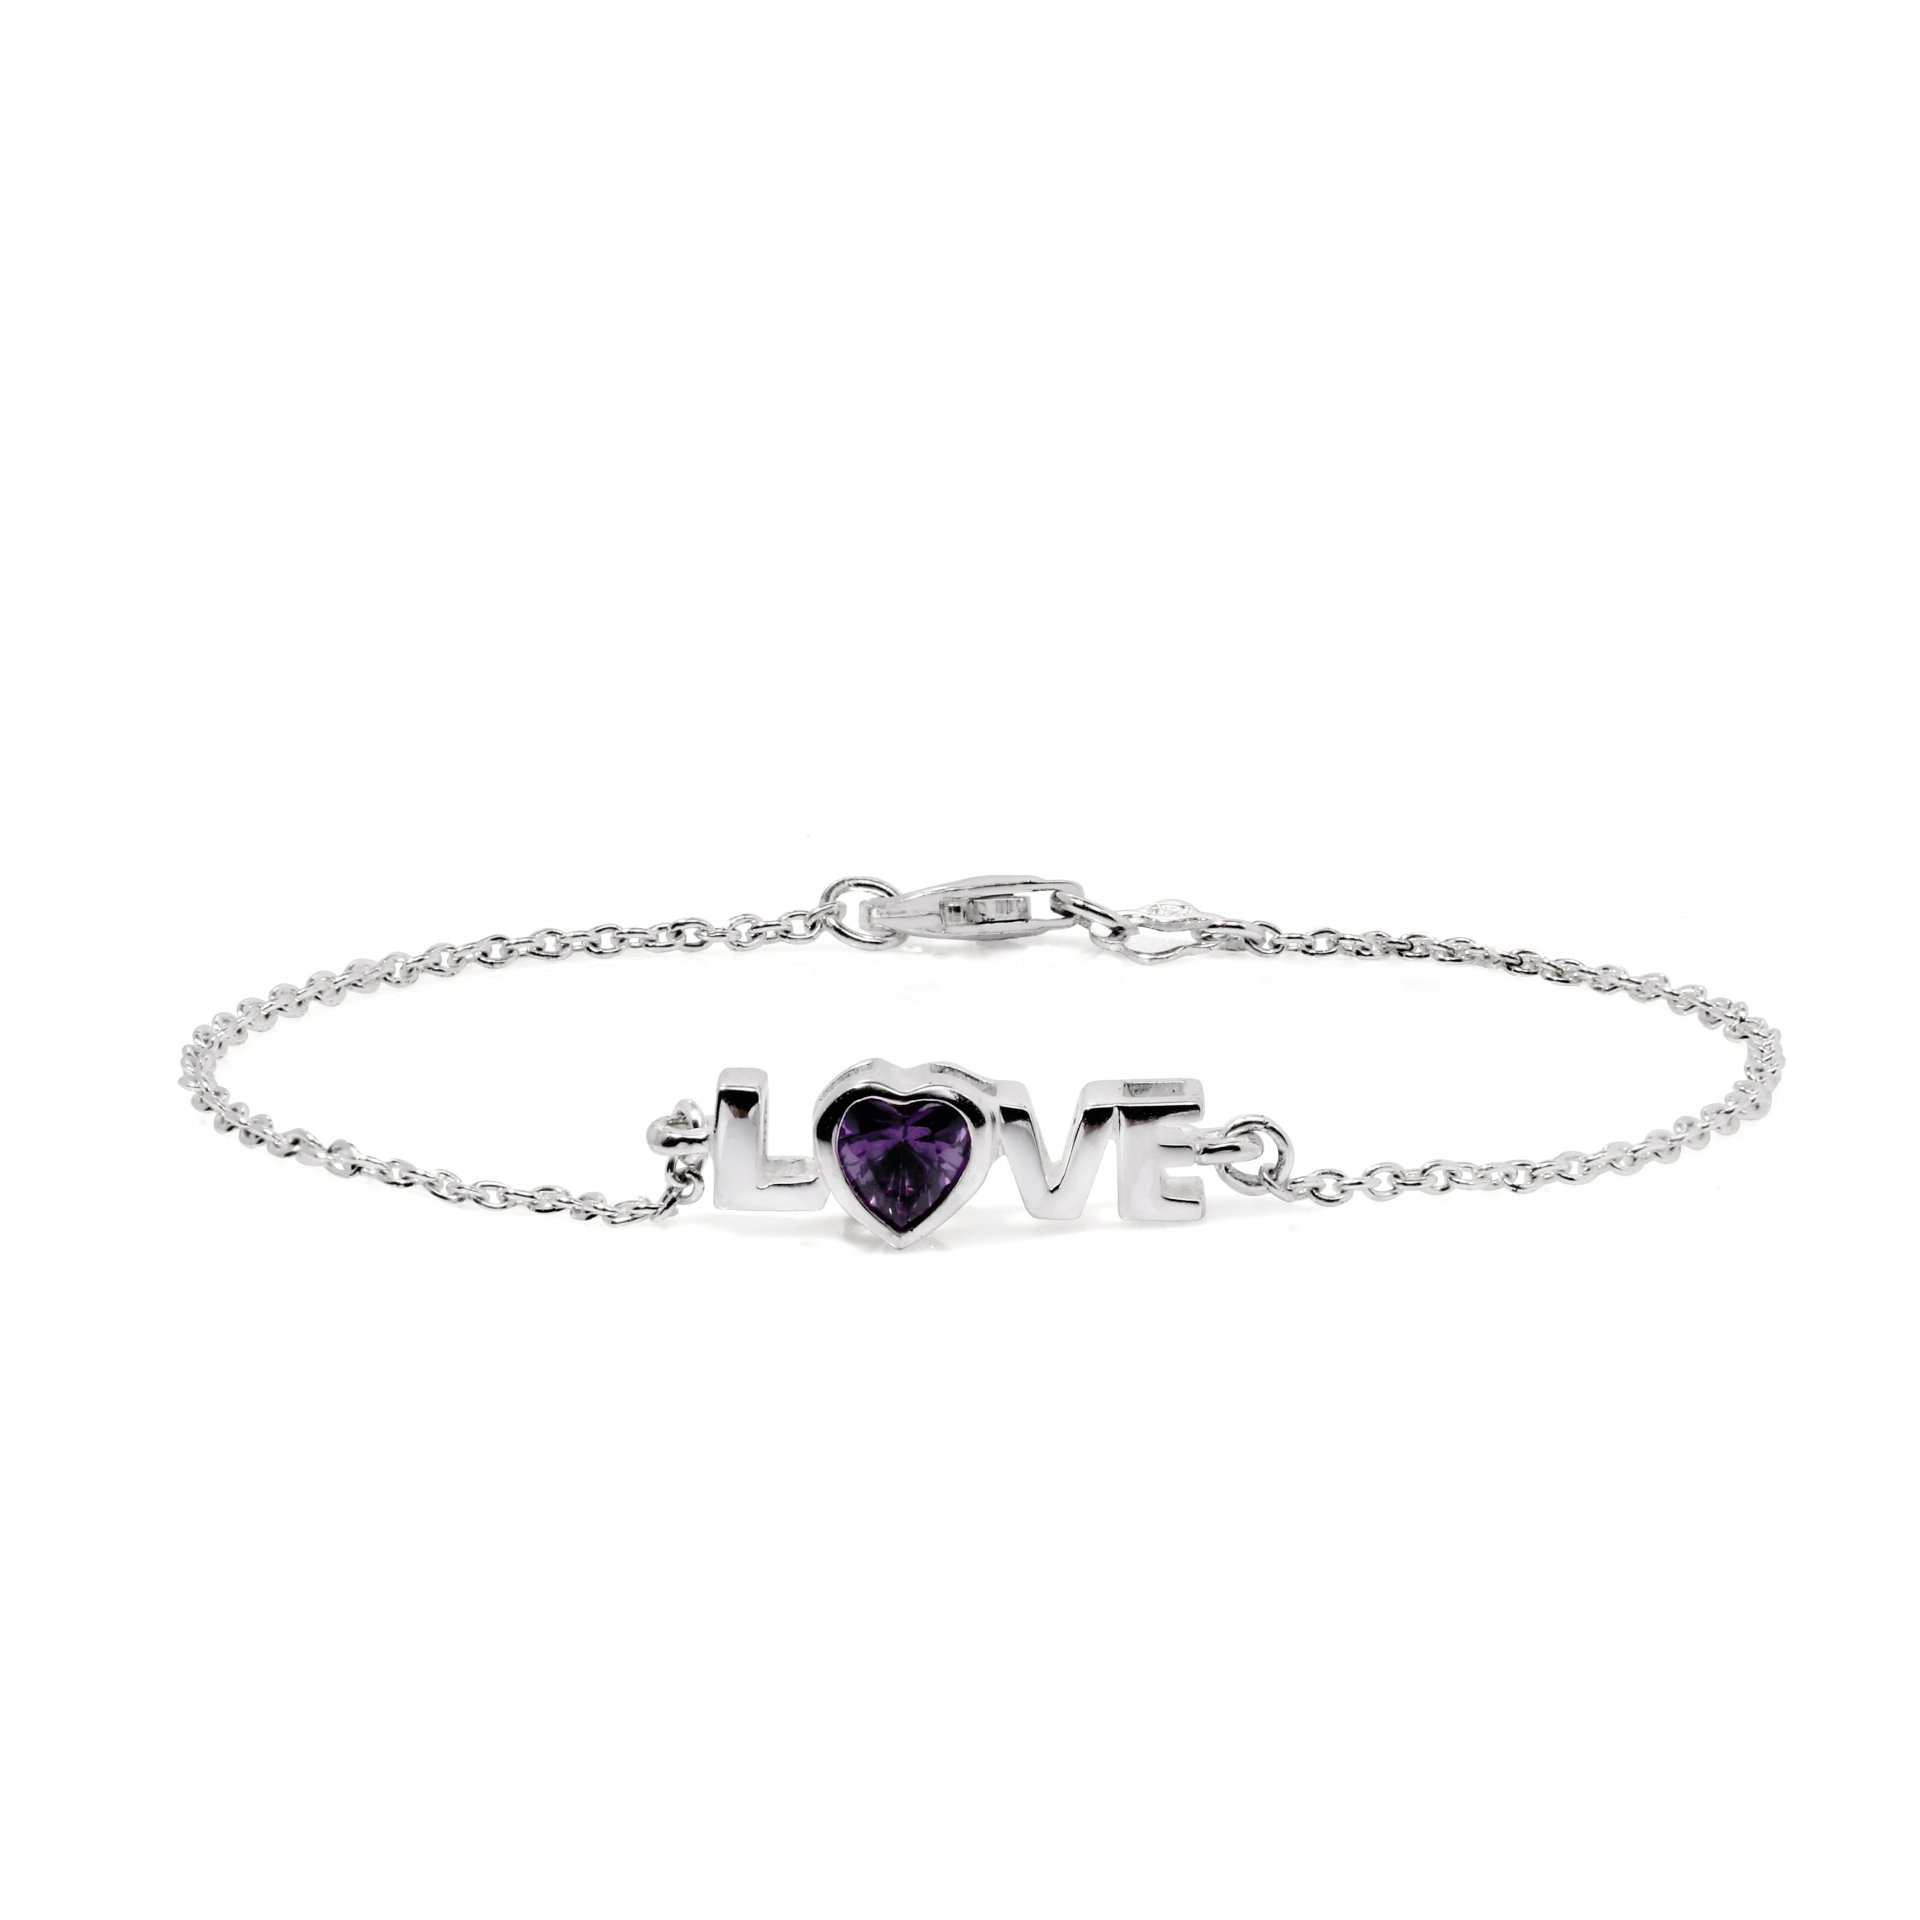 Sterling silver 'LOVE' bracelet